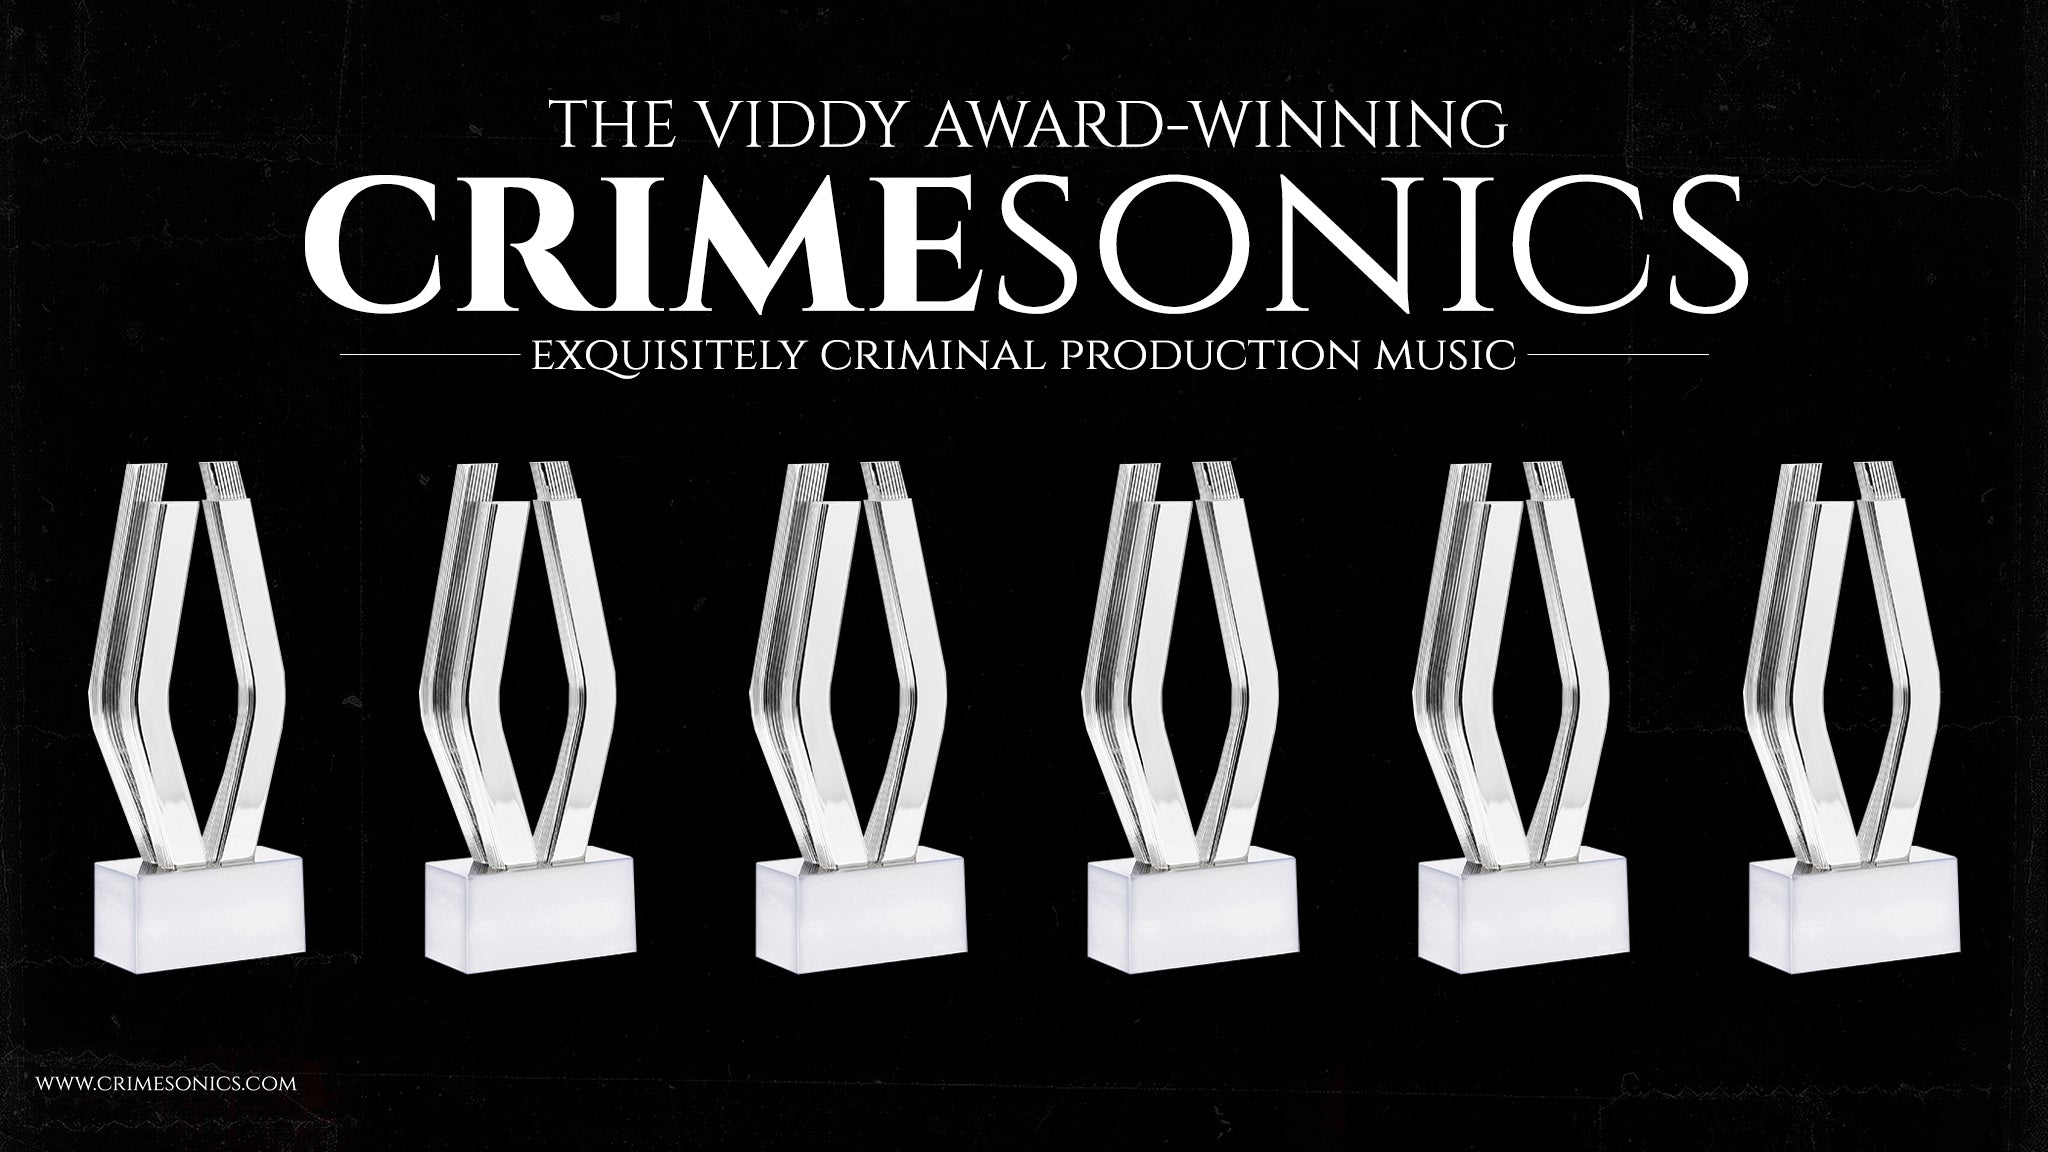 Viddy Award Winner CrimeSonics